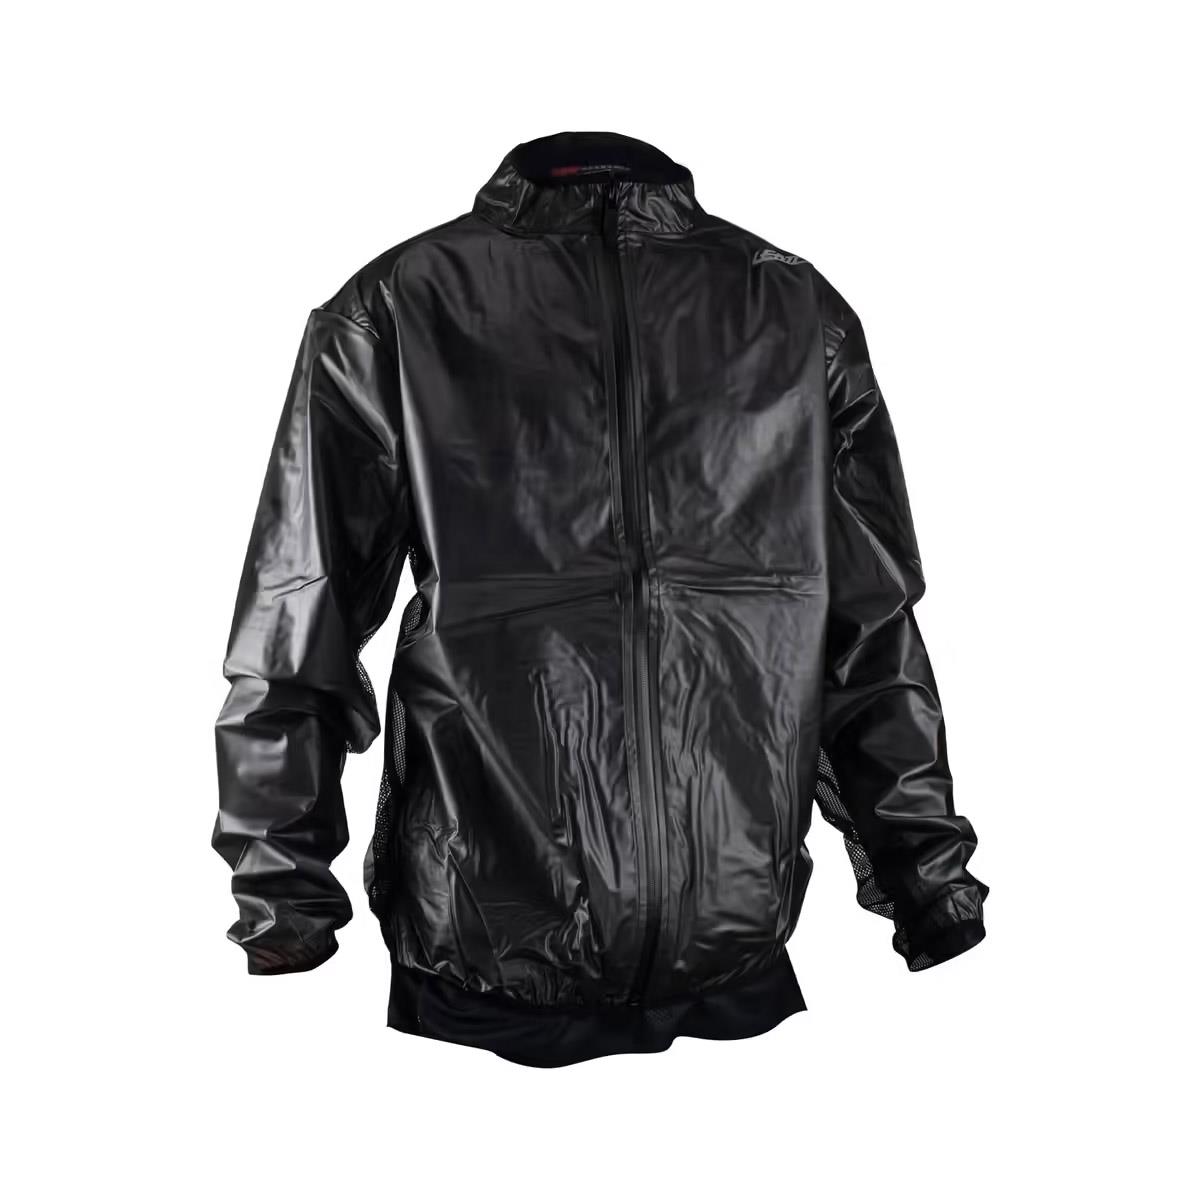 Waterproof Jacket Racecover black size S